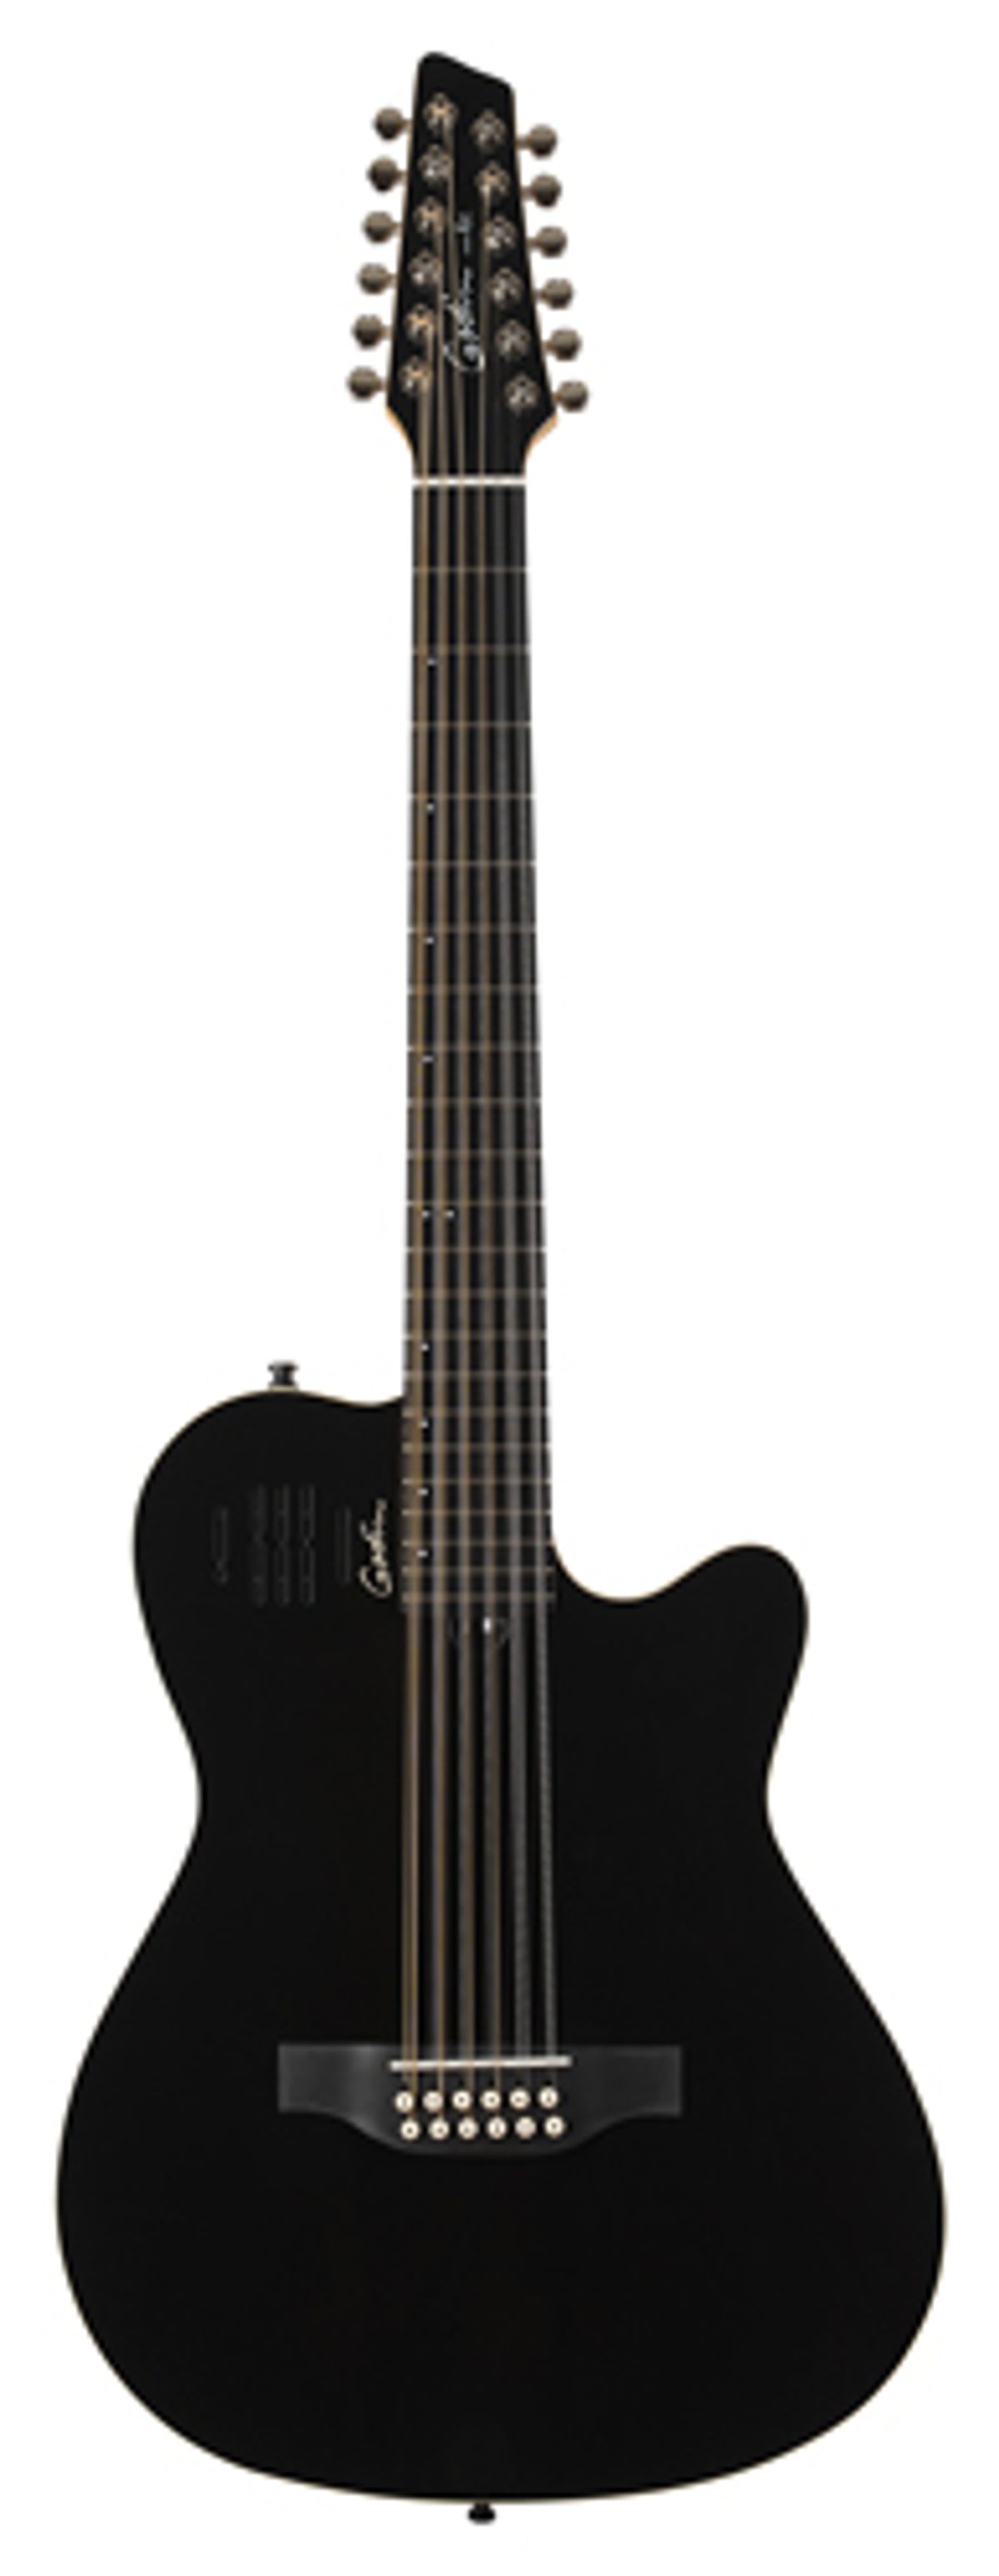 Godin Guitars Releases the A12 Black